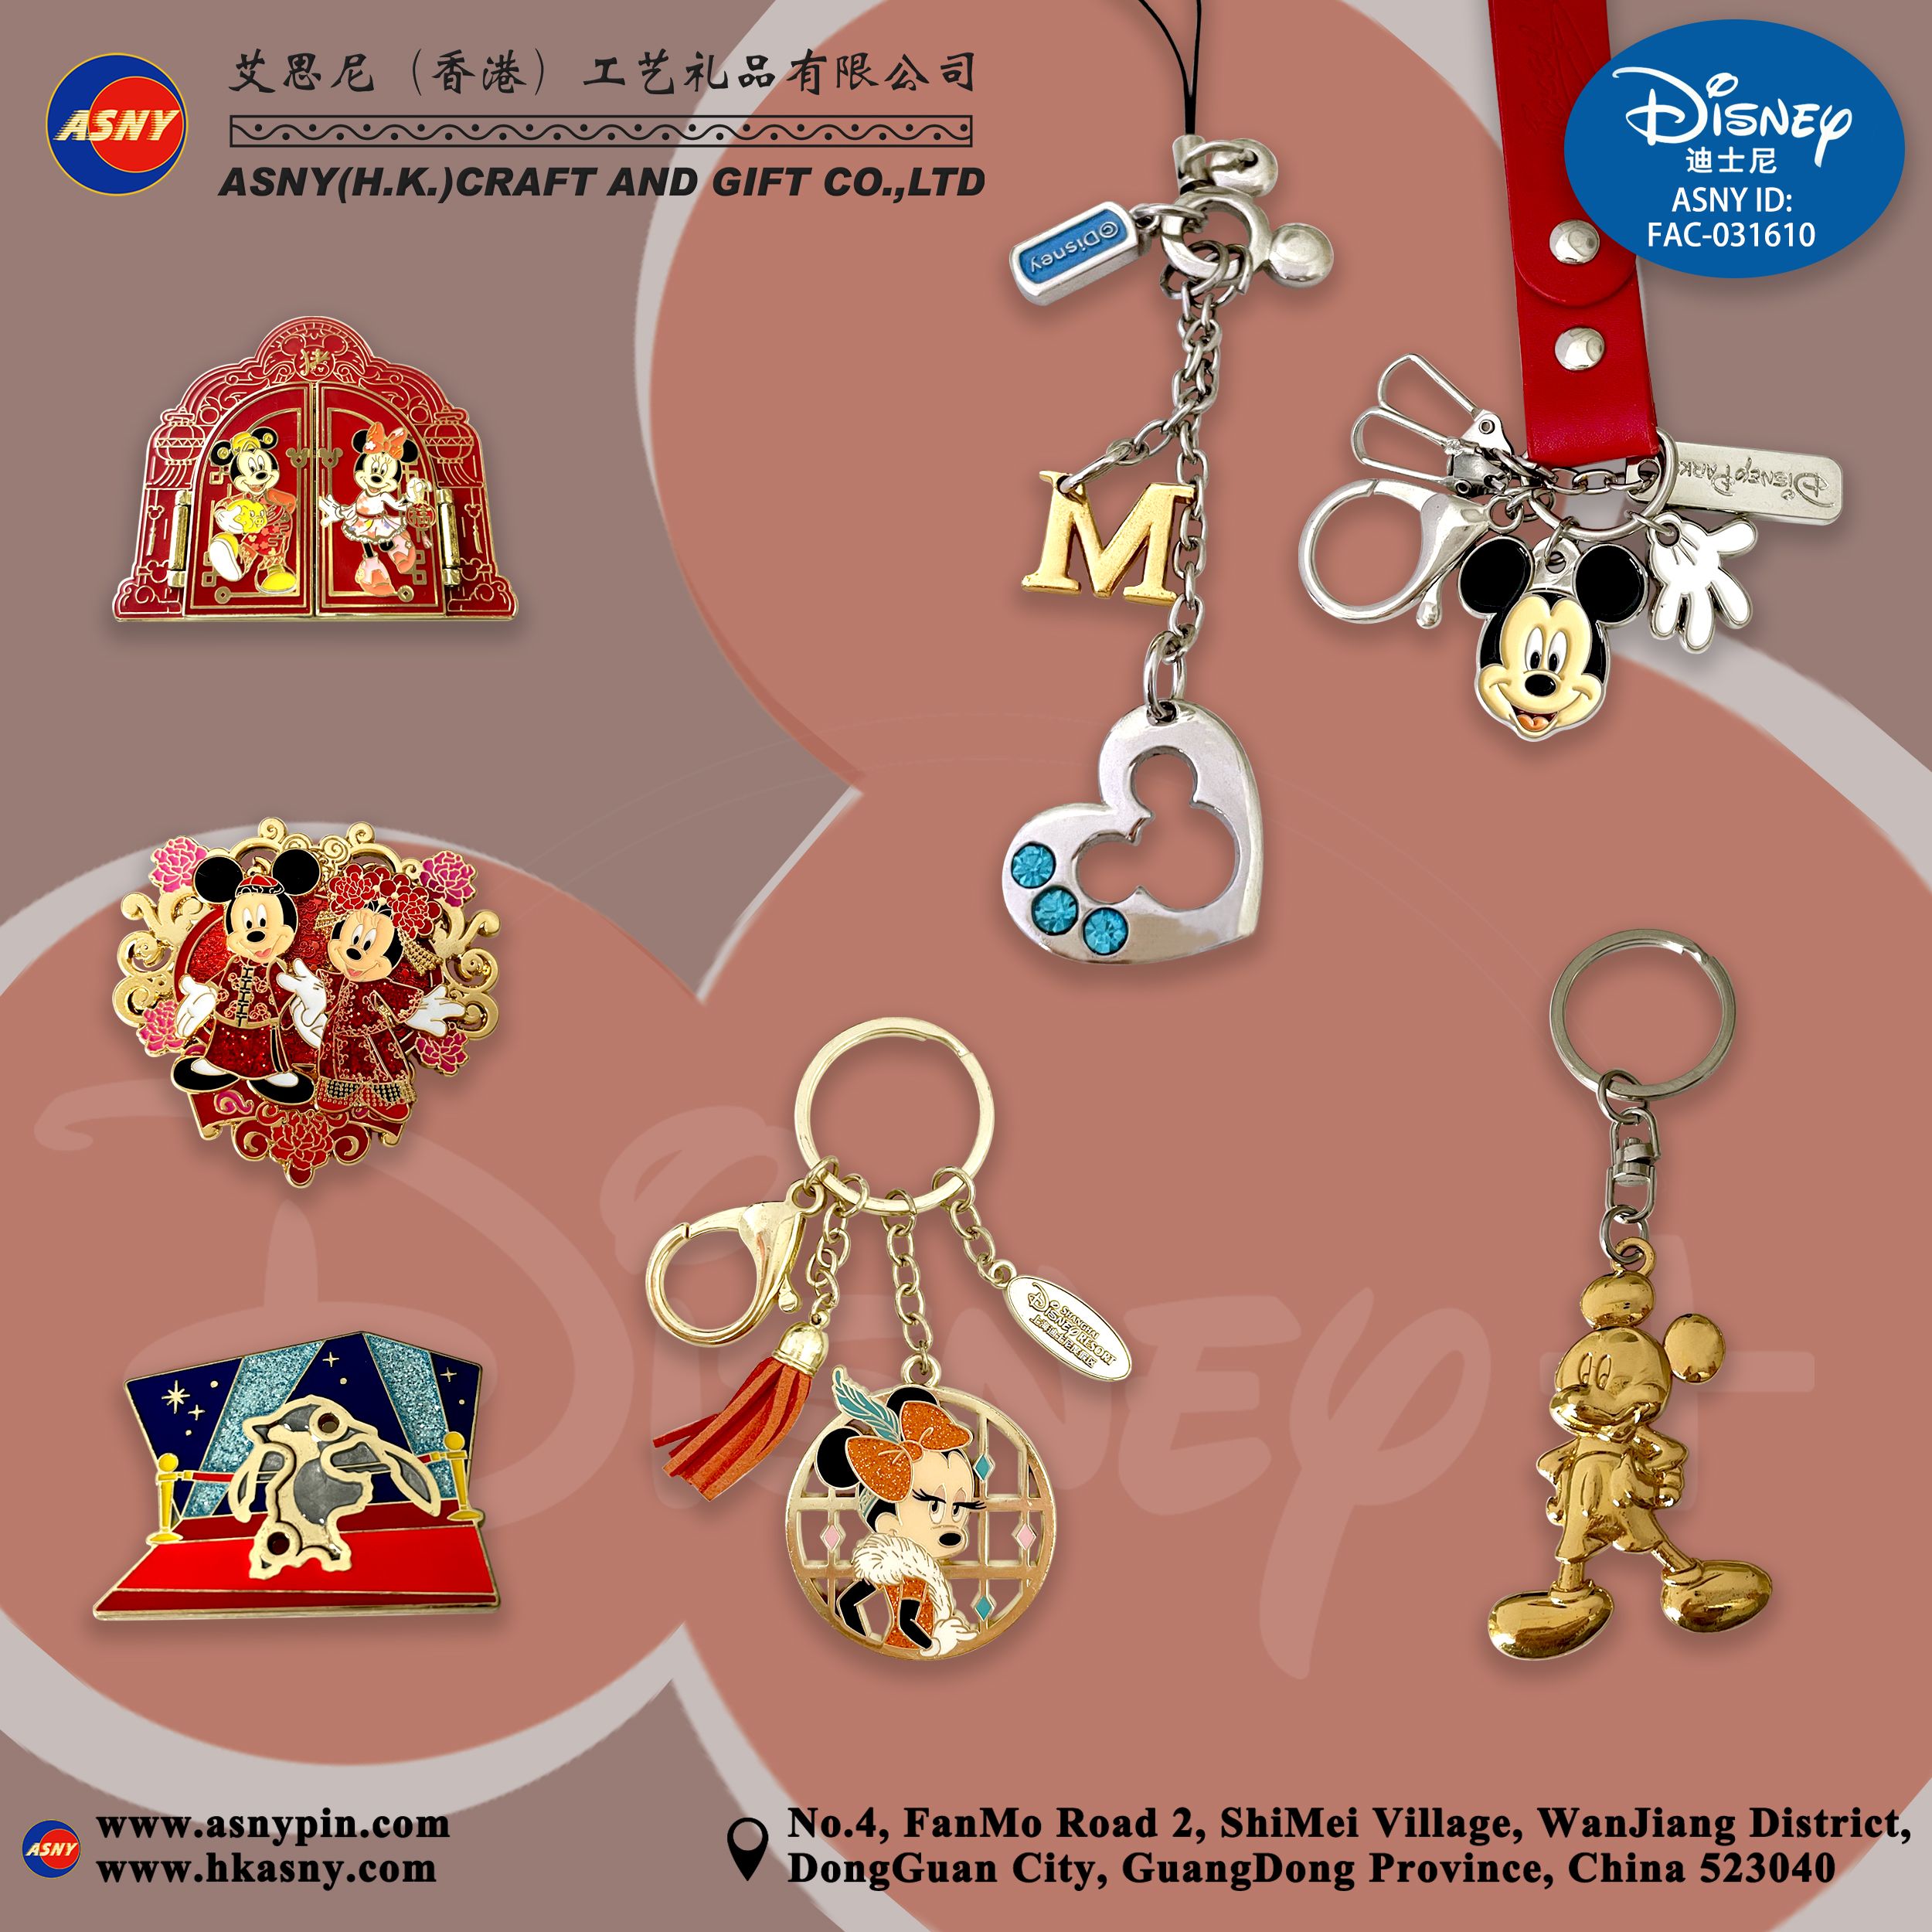 Catalog - Disney badge & pin & product（1）